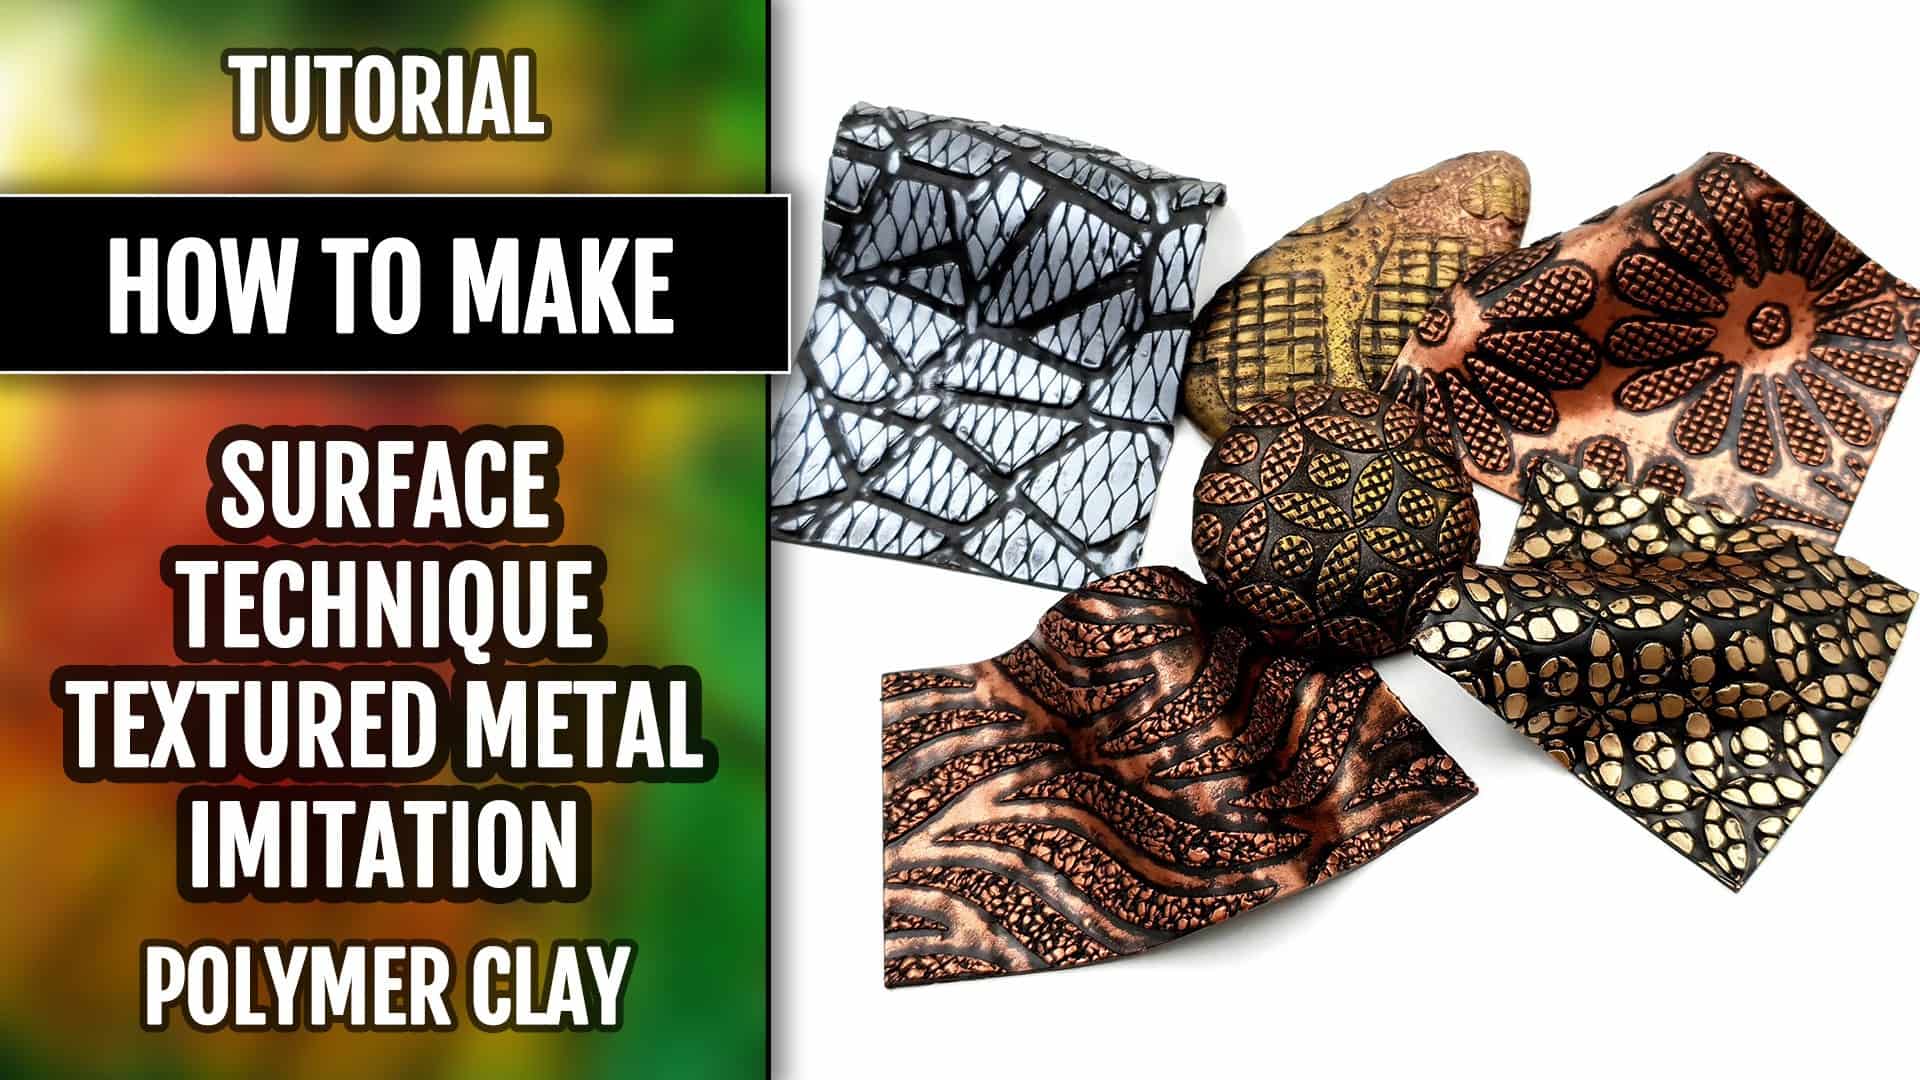 Textured Metal Imitation Surface technique